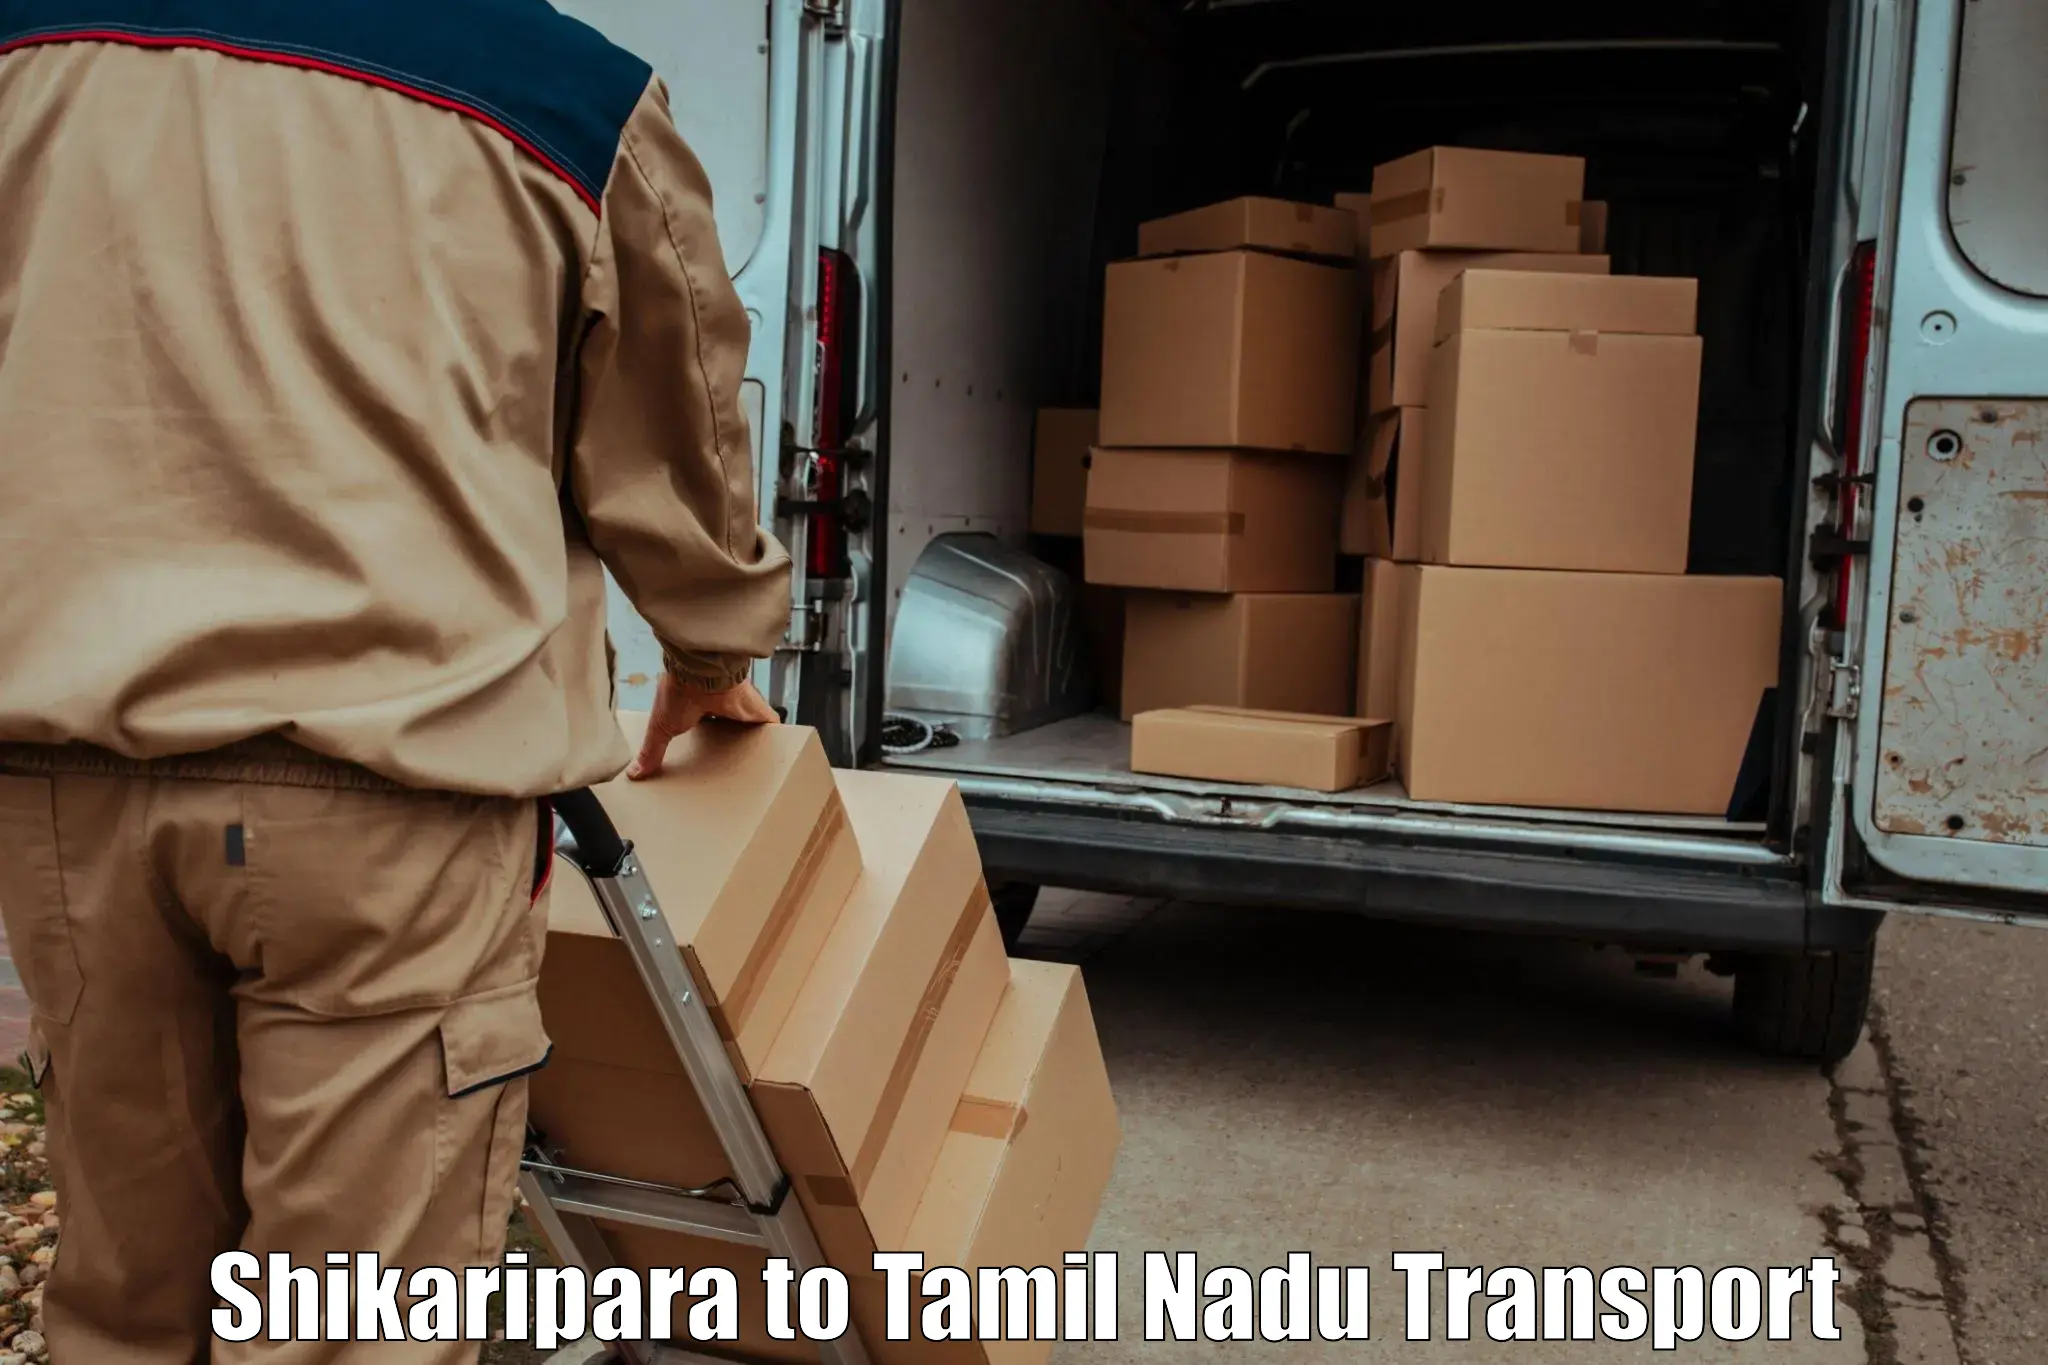 Truck transport companies in India Shikaripara to Chennai Port